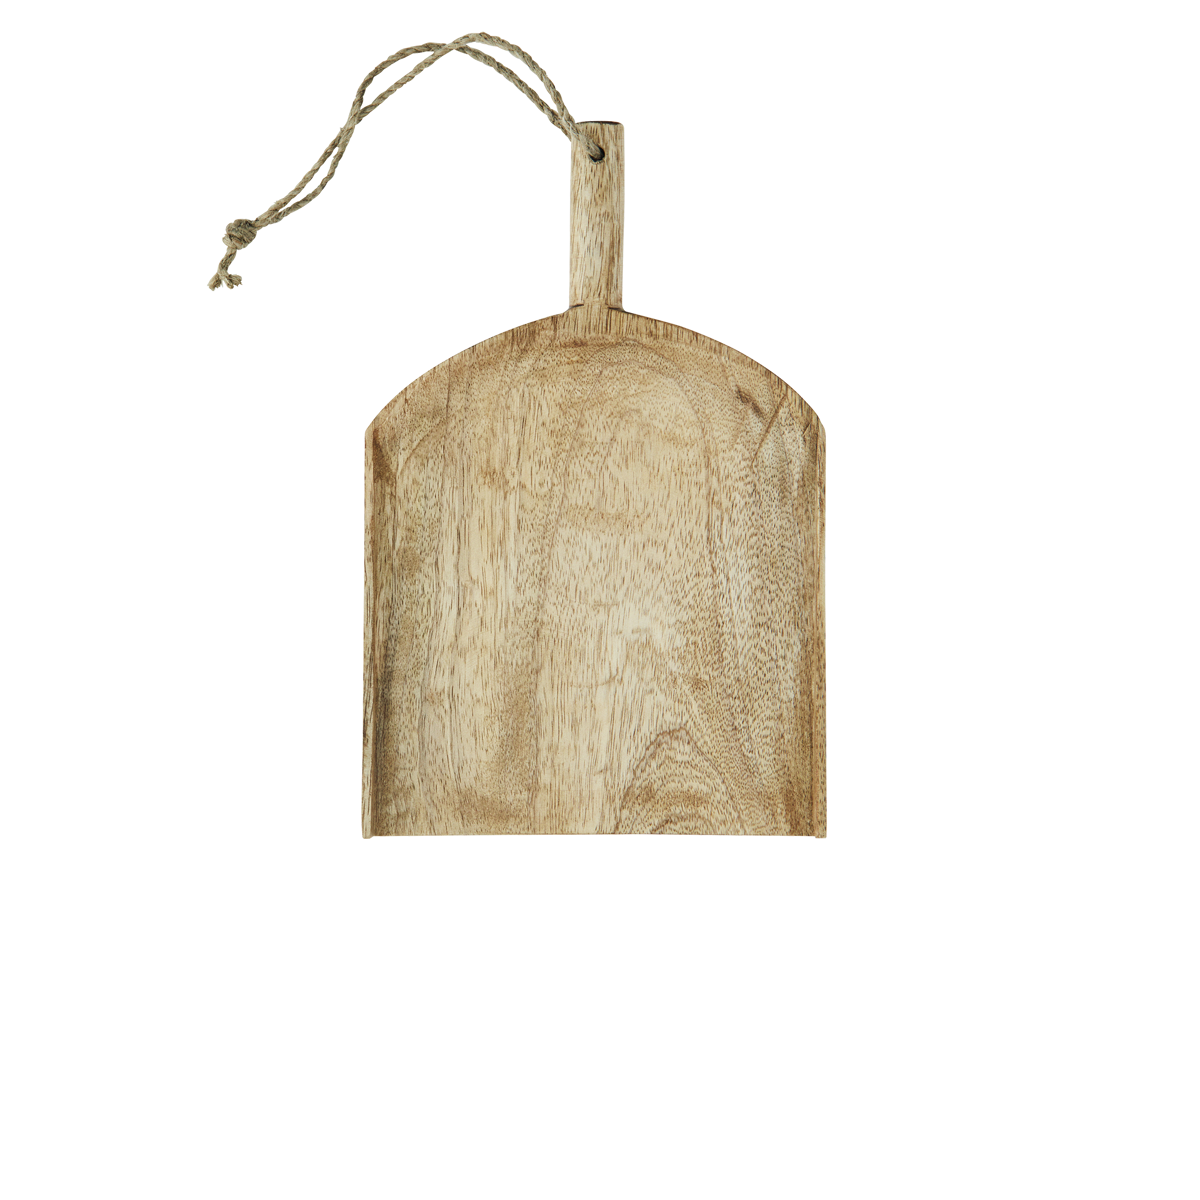 Wooden dustpan